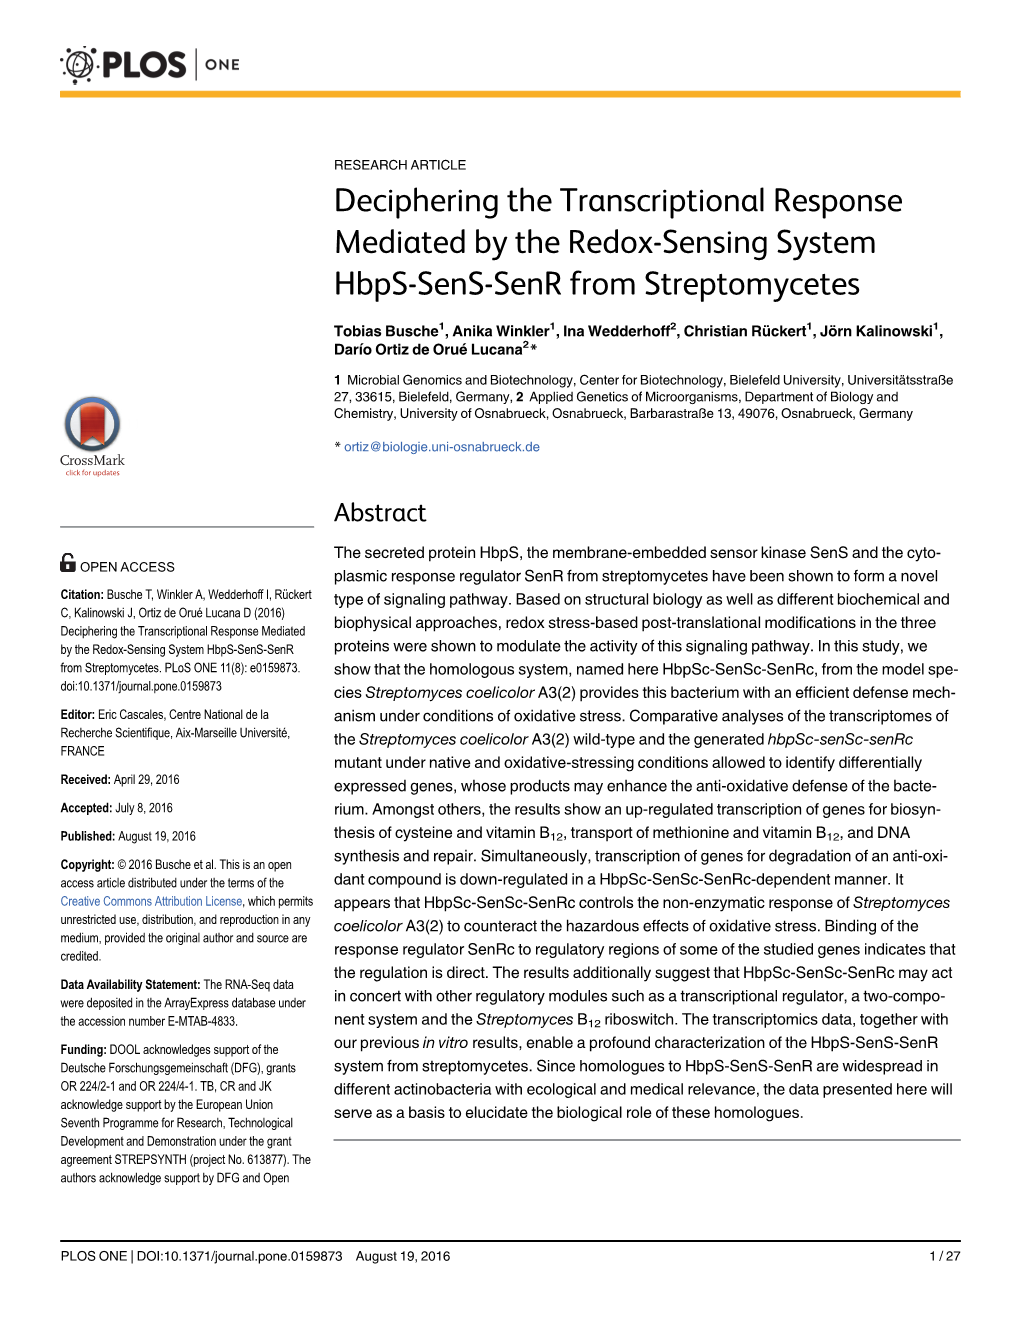 Deciphering the Transcriptional Response Mediated by the Redox-Sensing System Hbps-Sens-Senr from Streptomycetes